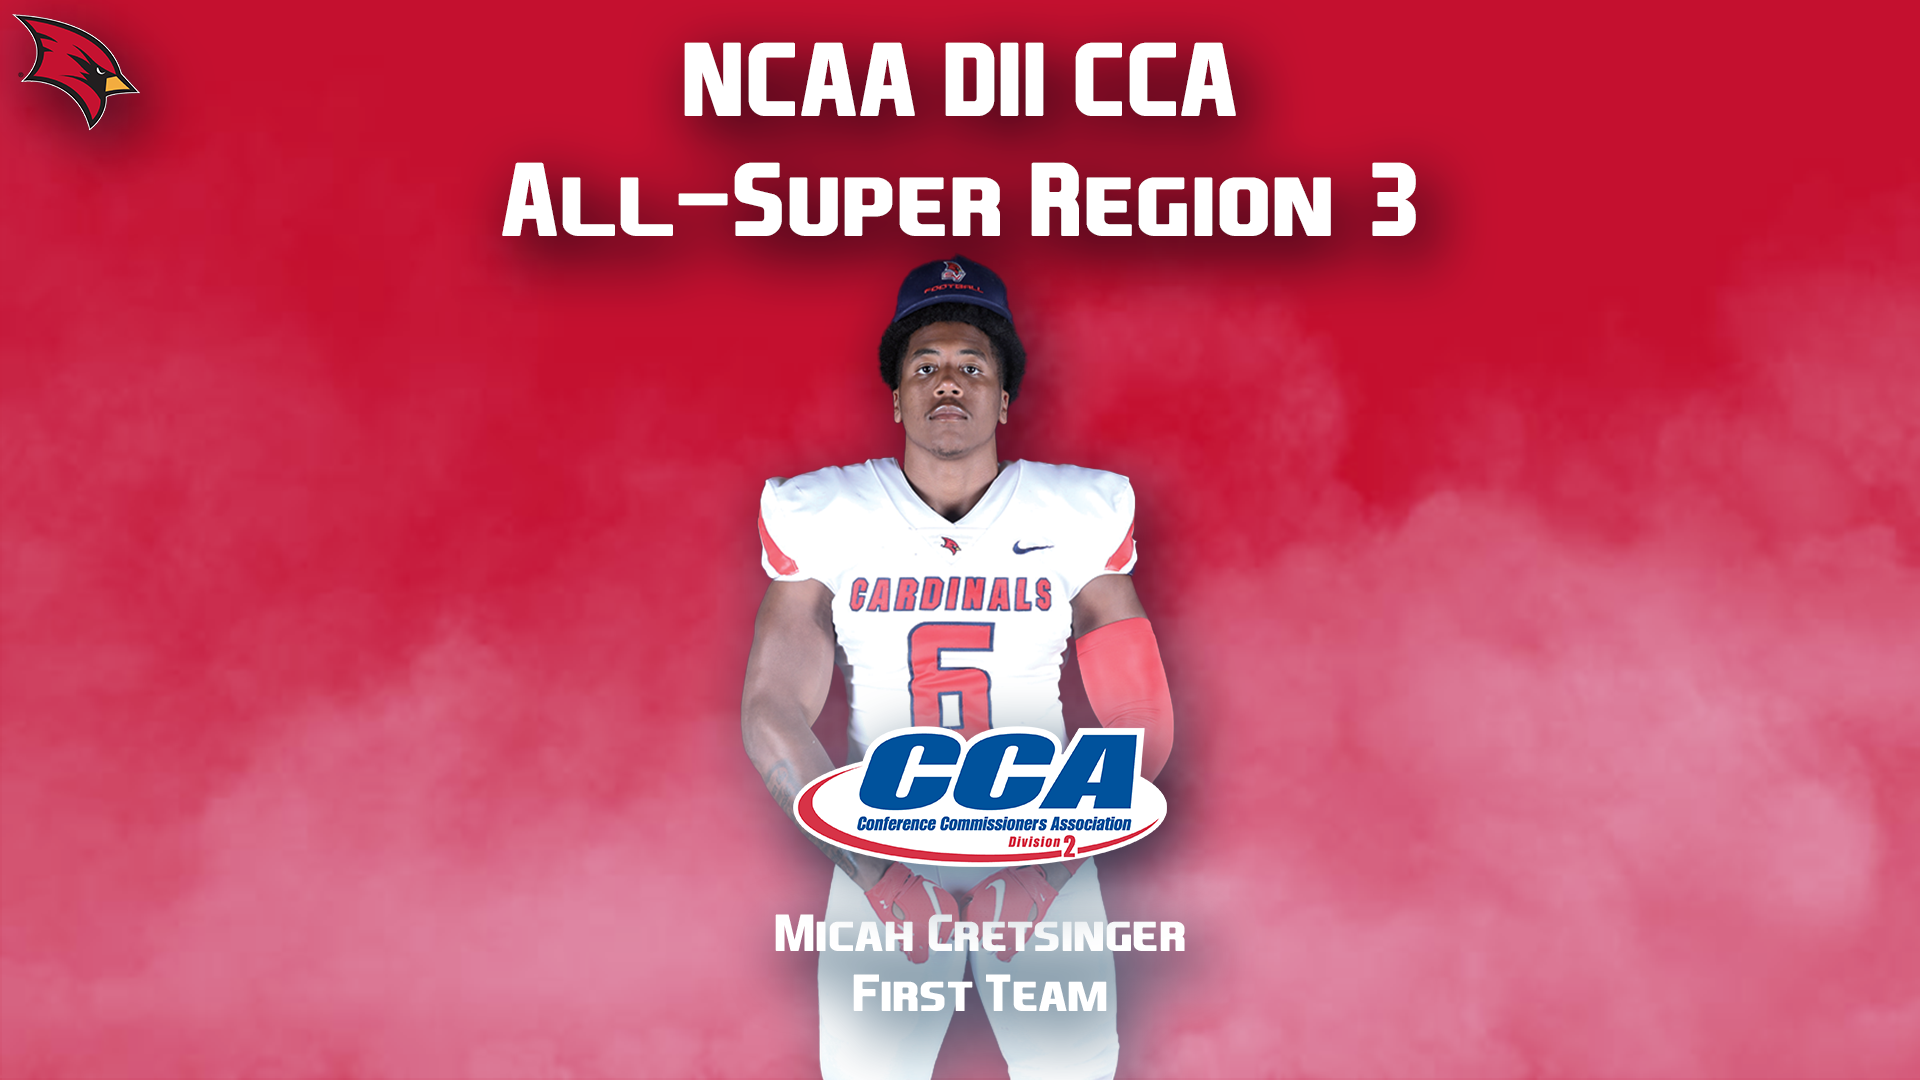 Micah Cretsinger Named D2CCA All-Super Region 3 First Team